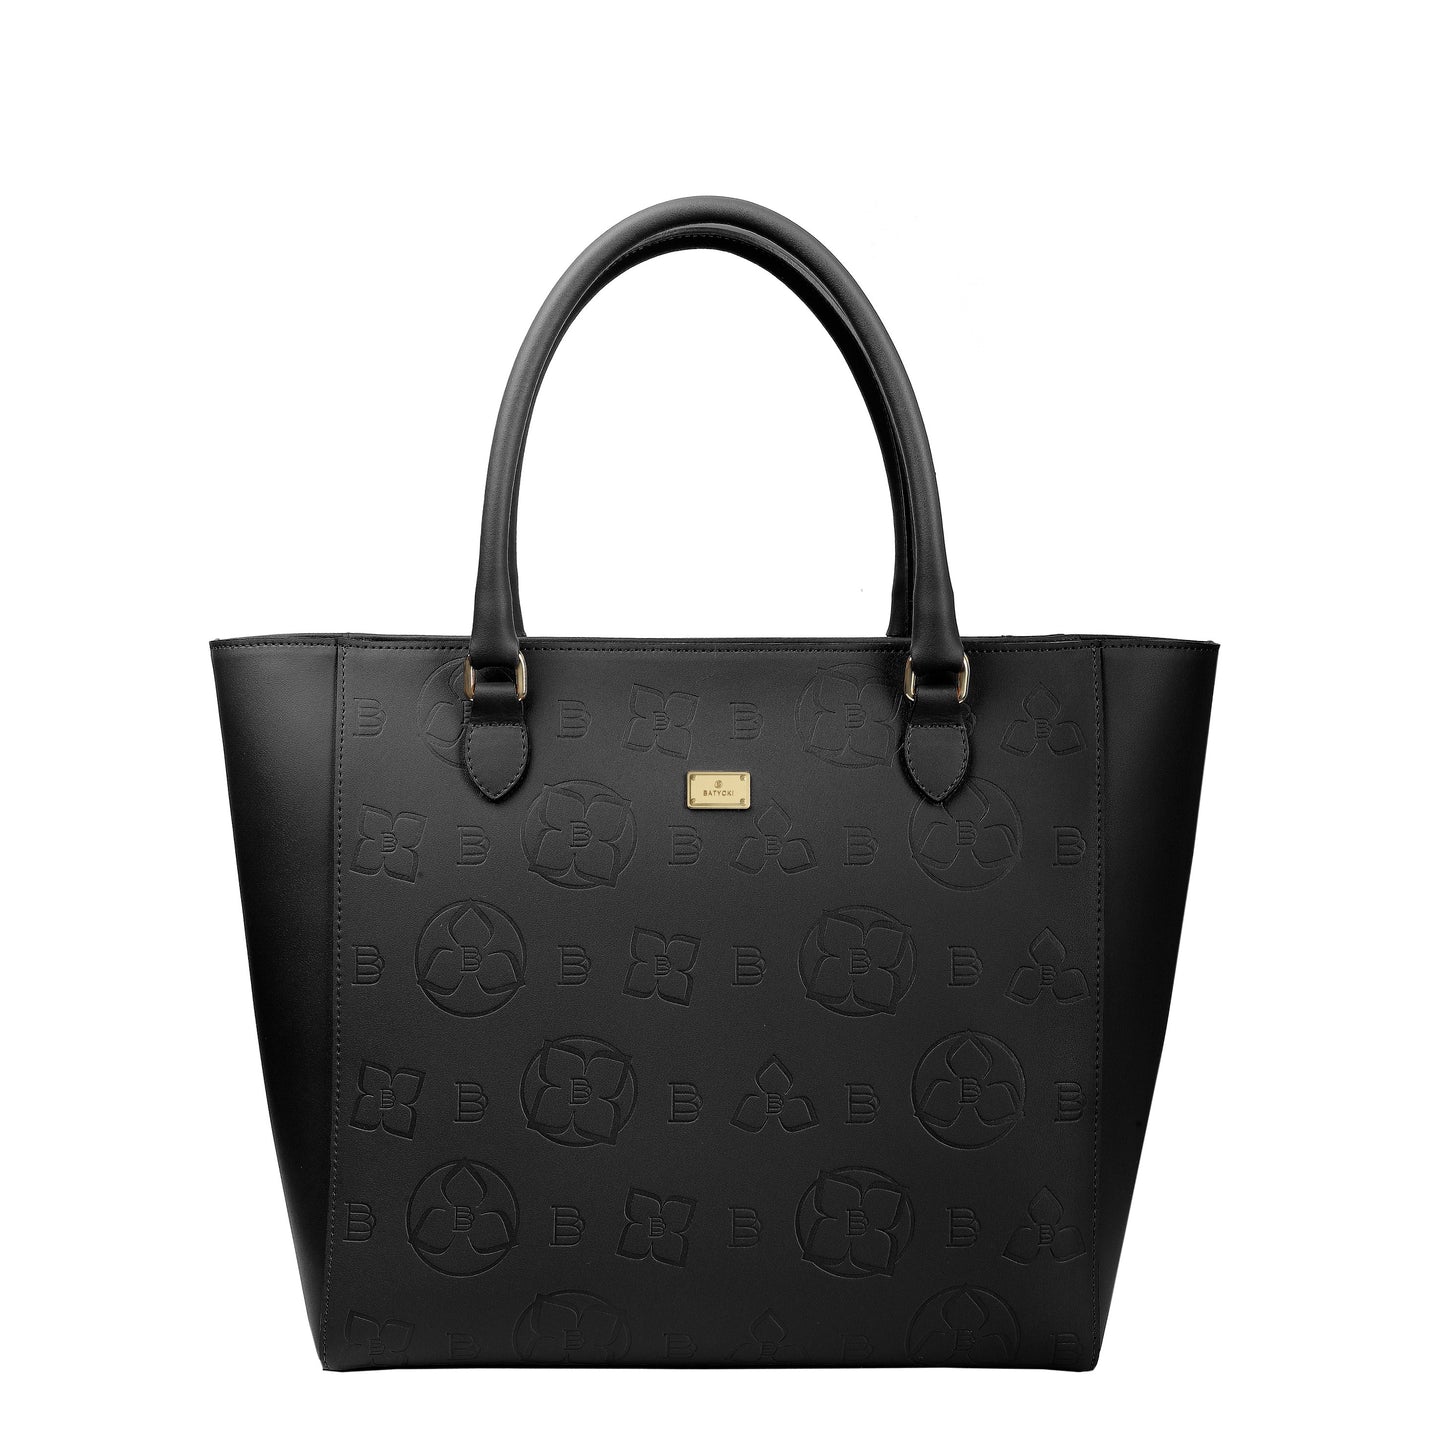 STAMPIA L NAPA BLACK women's leather handbag